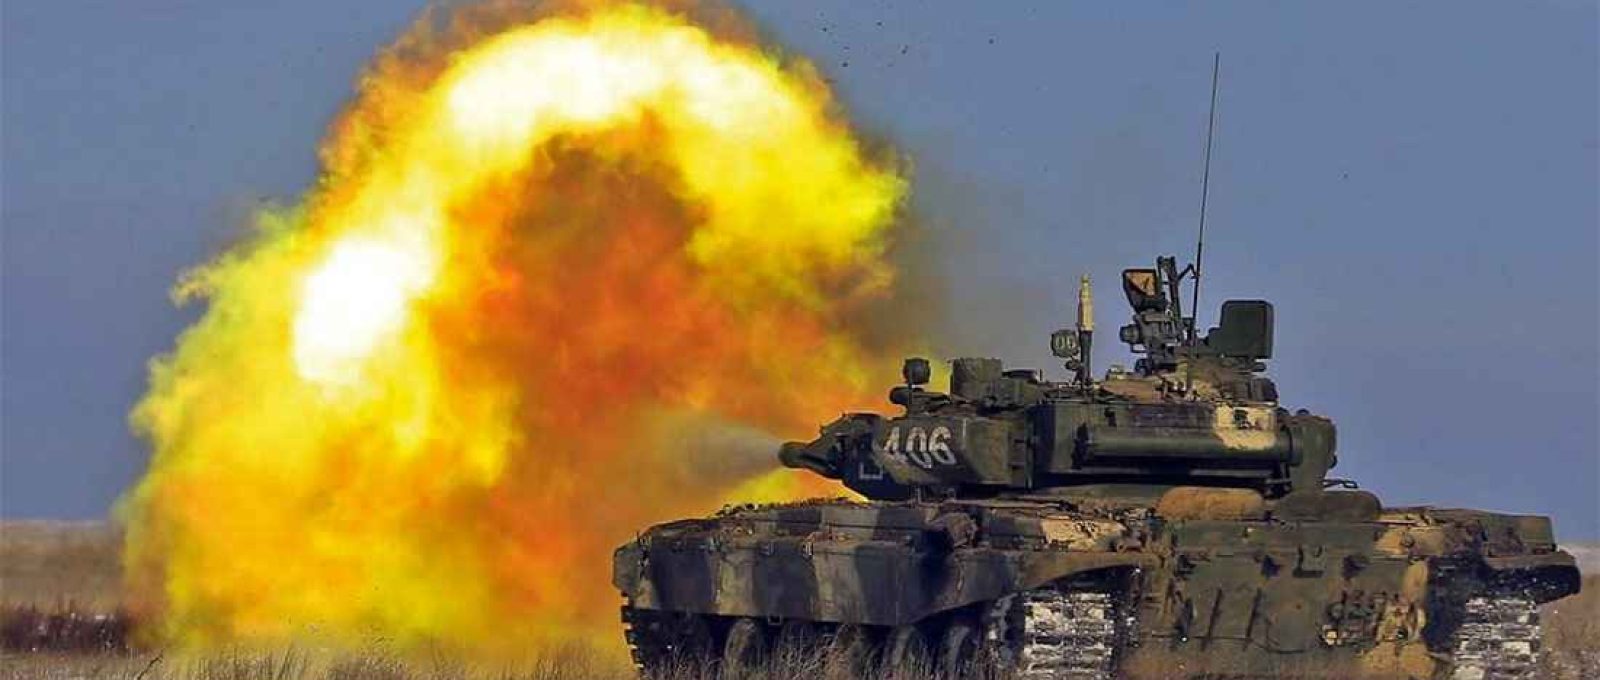 Tanque T-90 russo disparando (Creative Commons).